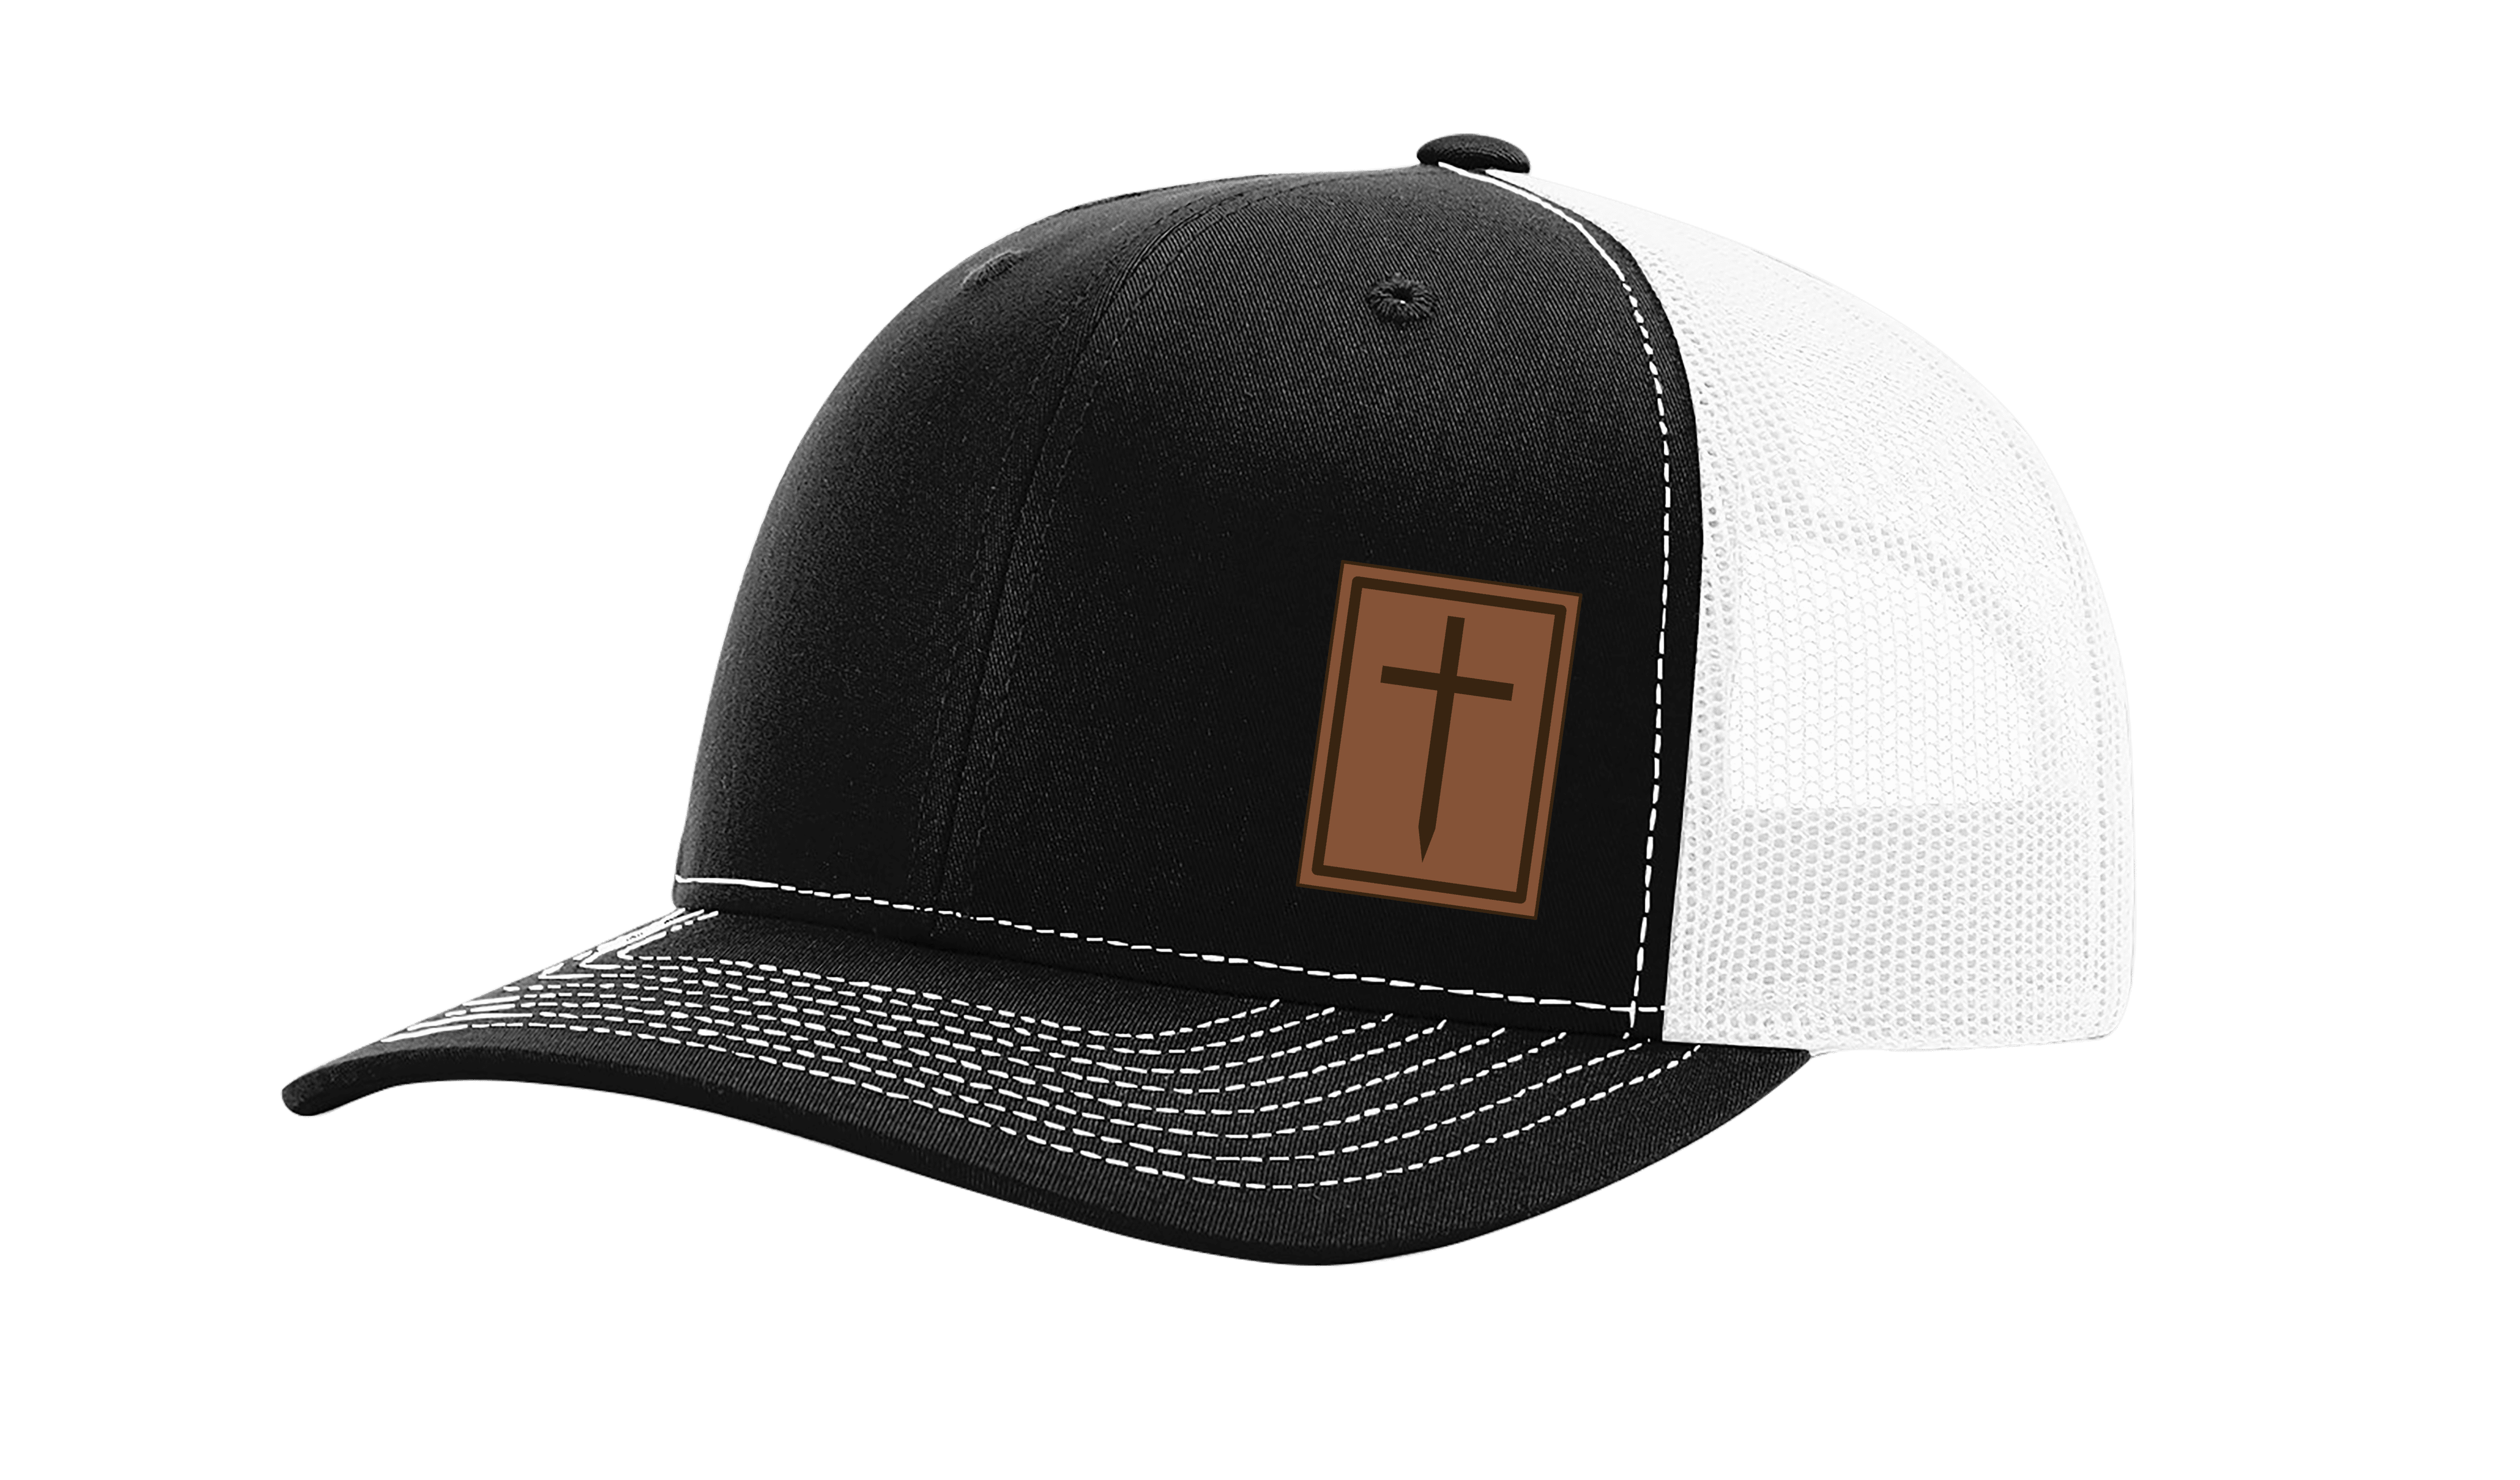 Heritage Pride Script Logo Laser Engraved Leather Mens Trucker Hat Baseball  Cap, Break Up Country Camo/Chocolate 